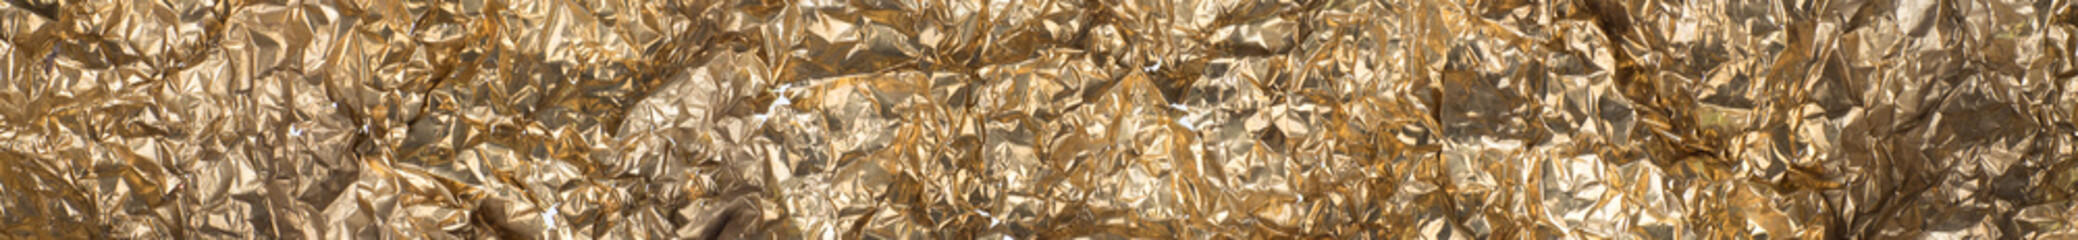 texture festive christmas gold foil background